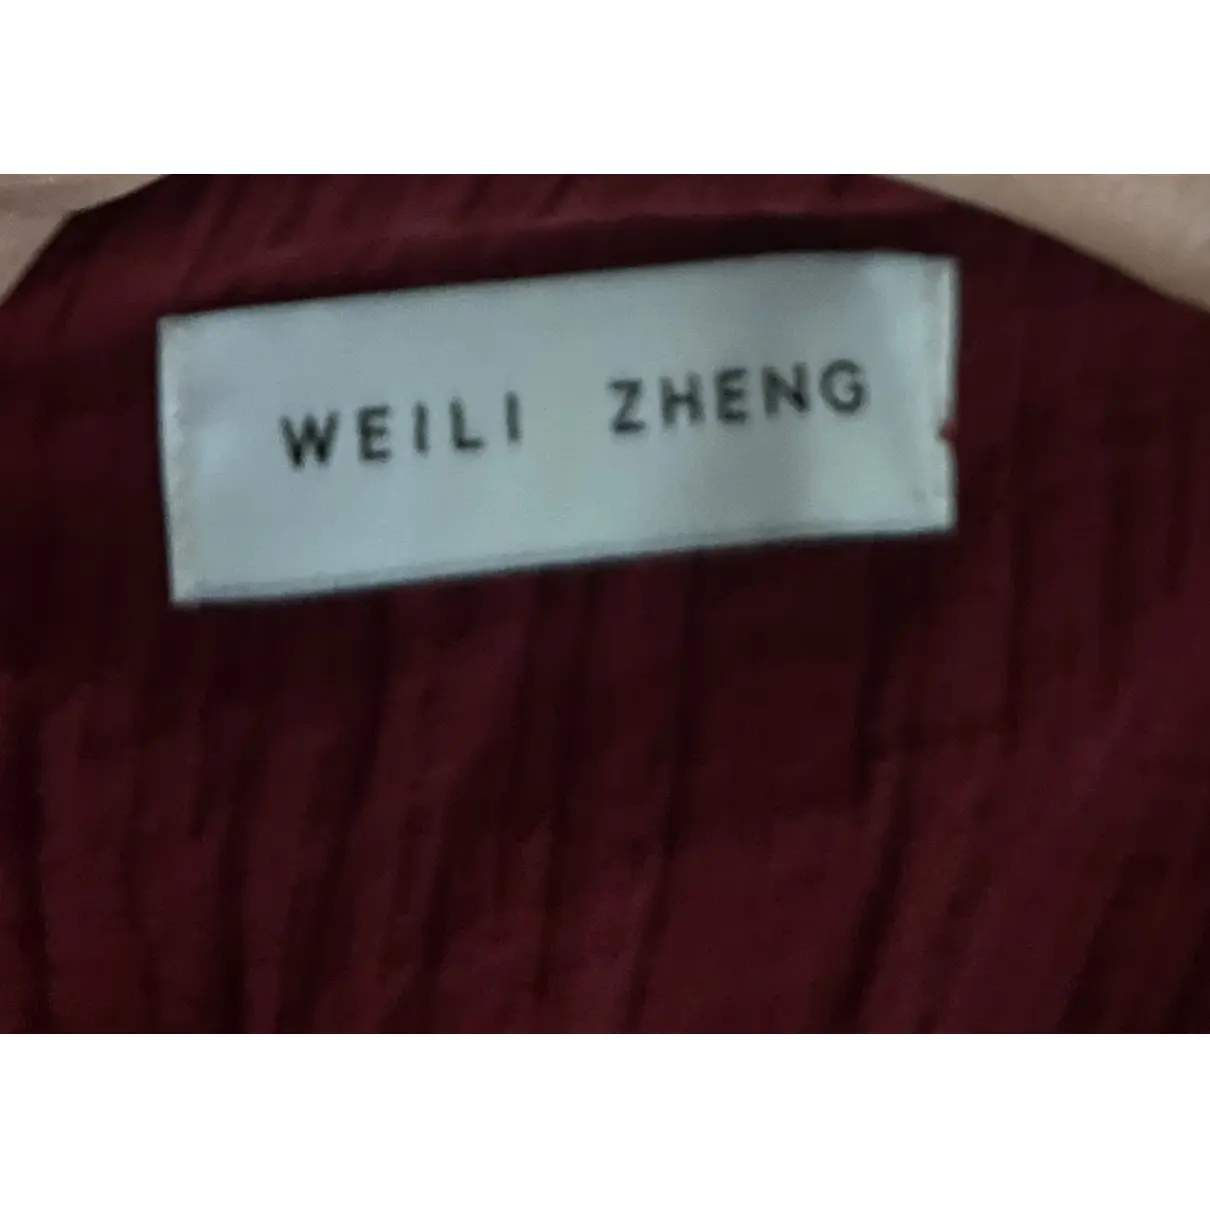 Buy Weili Zheng Jumpsuit online